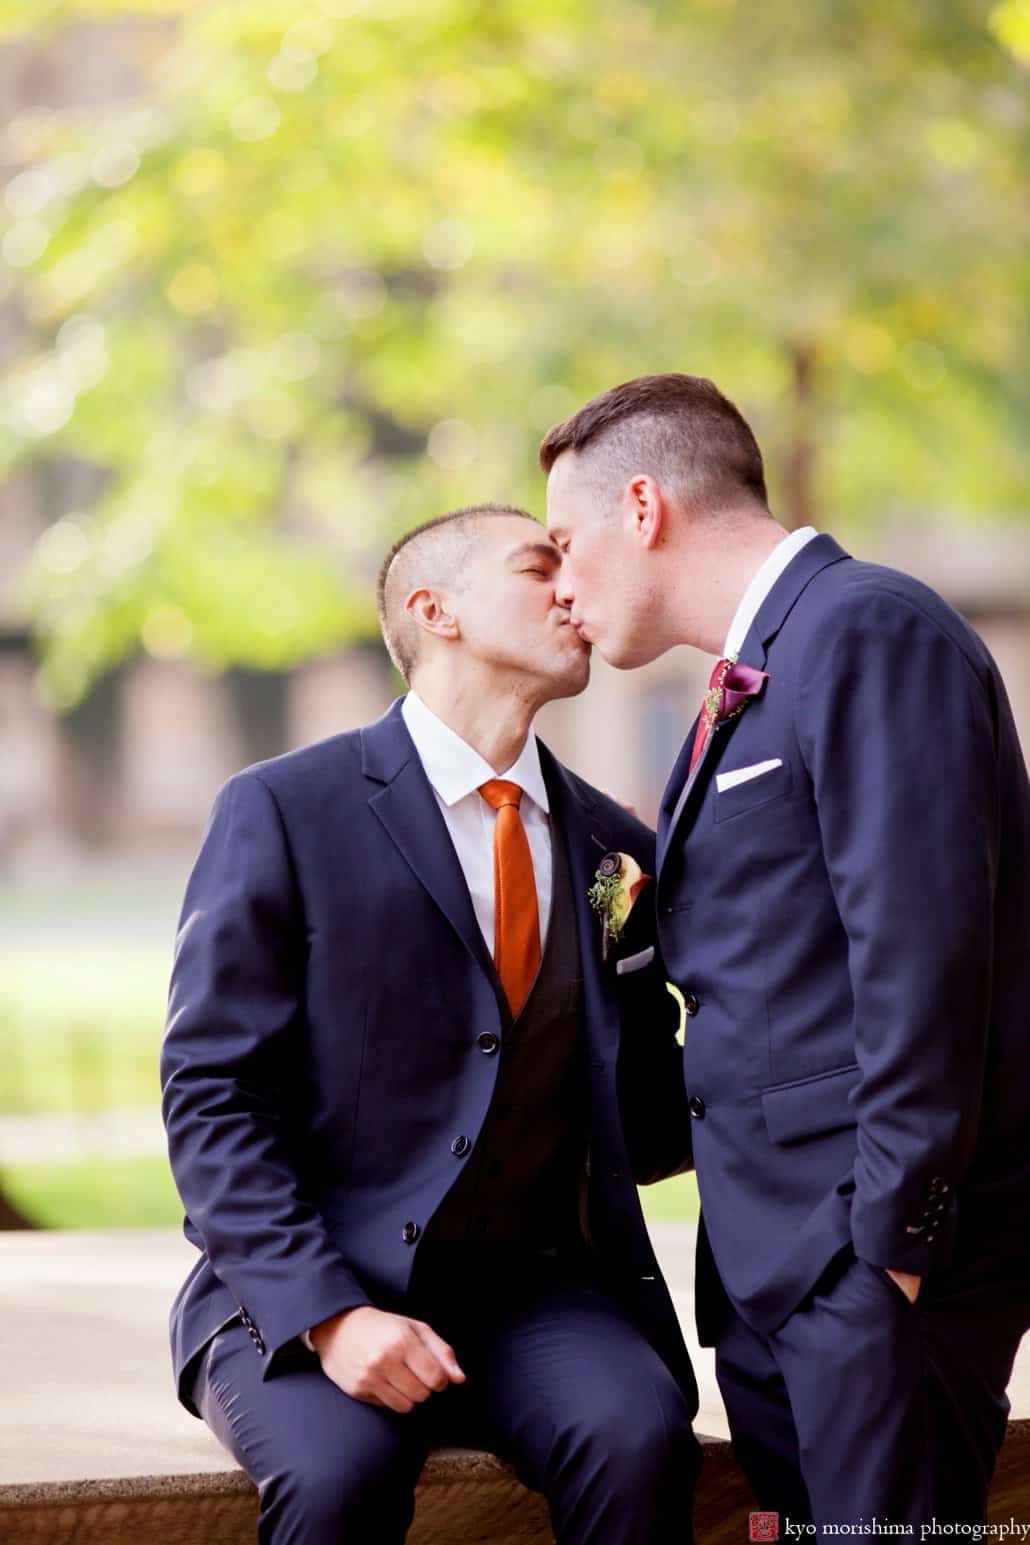 LGBT wedding portrait kiss on Princeton campus, photographed by Kyo Morishima